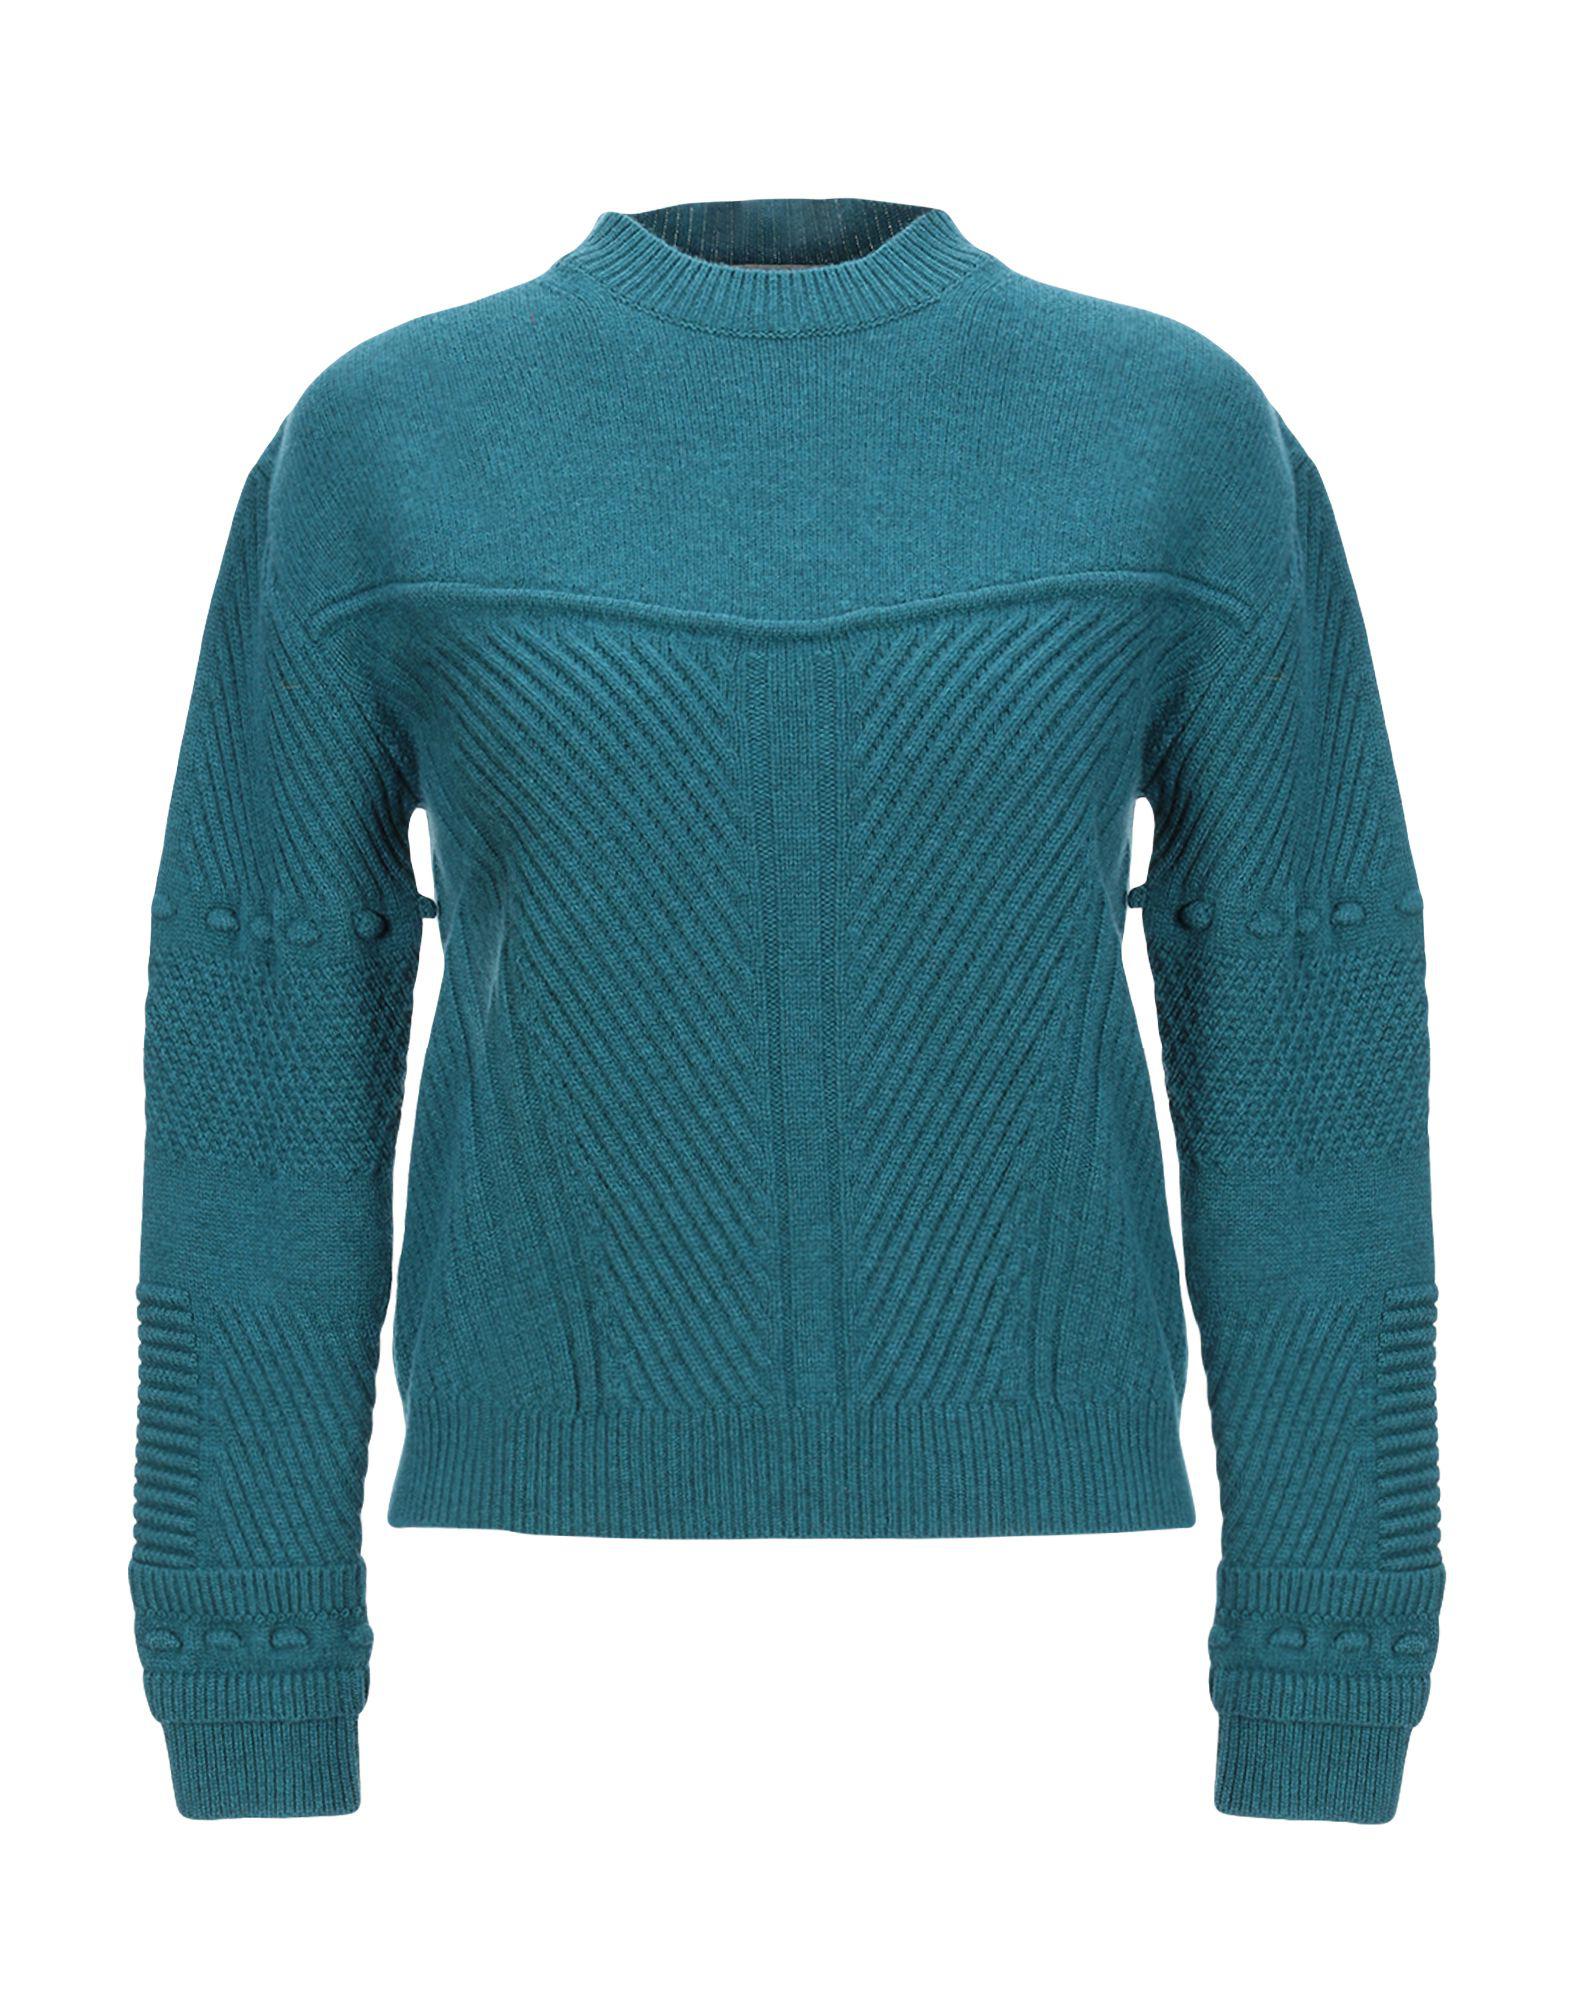 Carolina Herrera Wool Sweater in Slate Blue (Blue) - Lyst